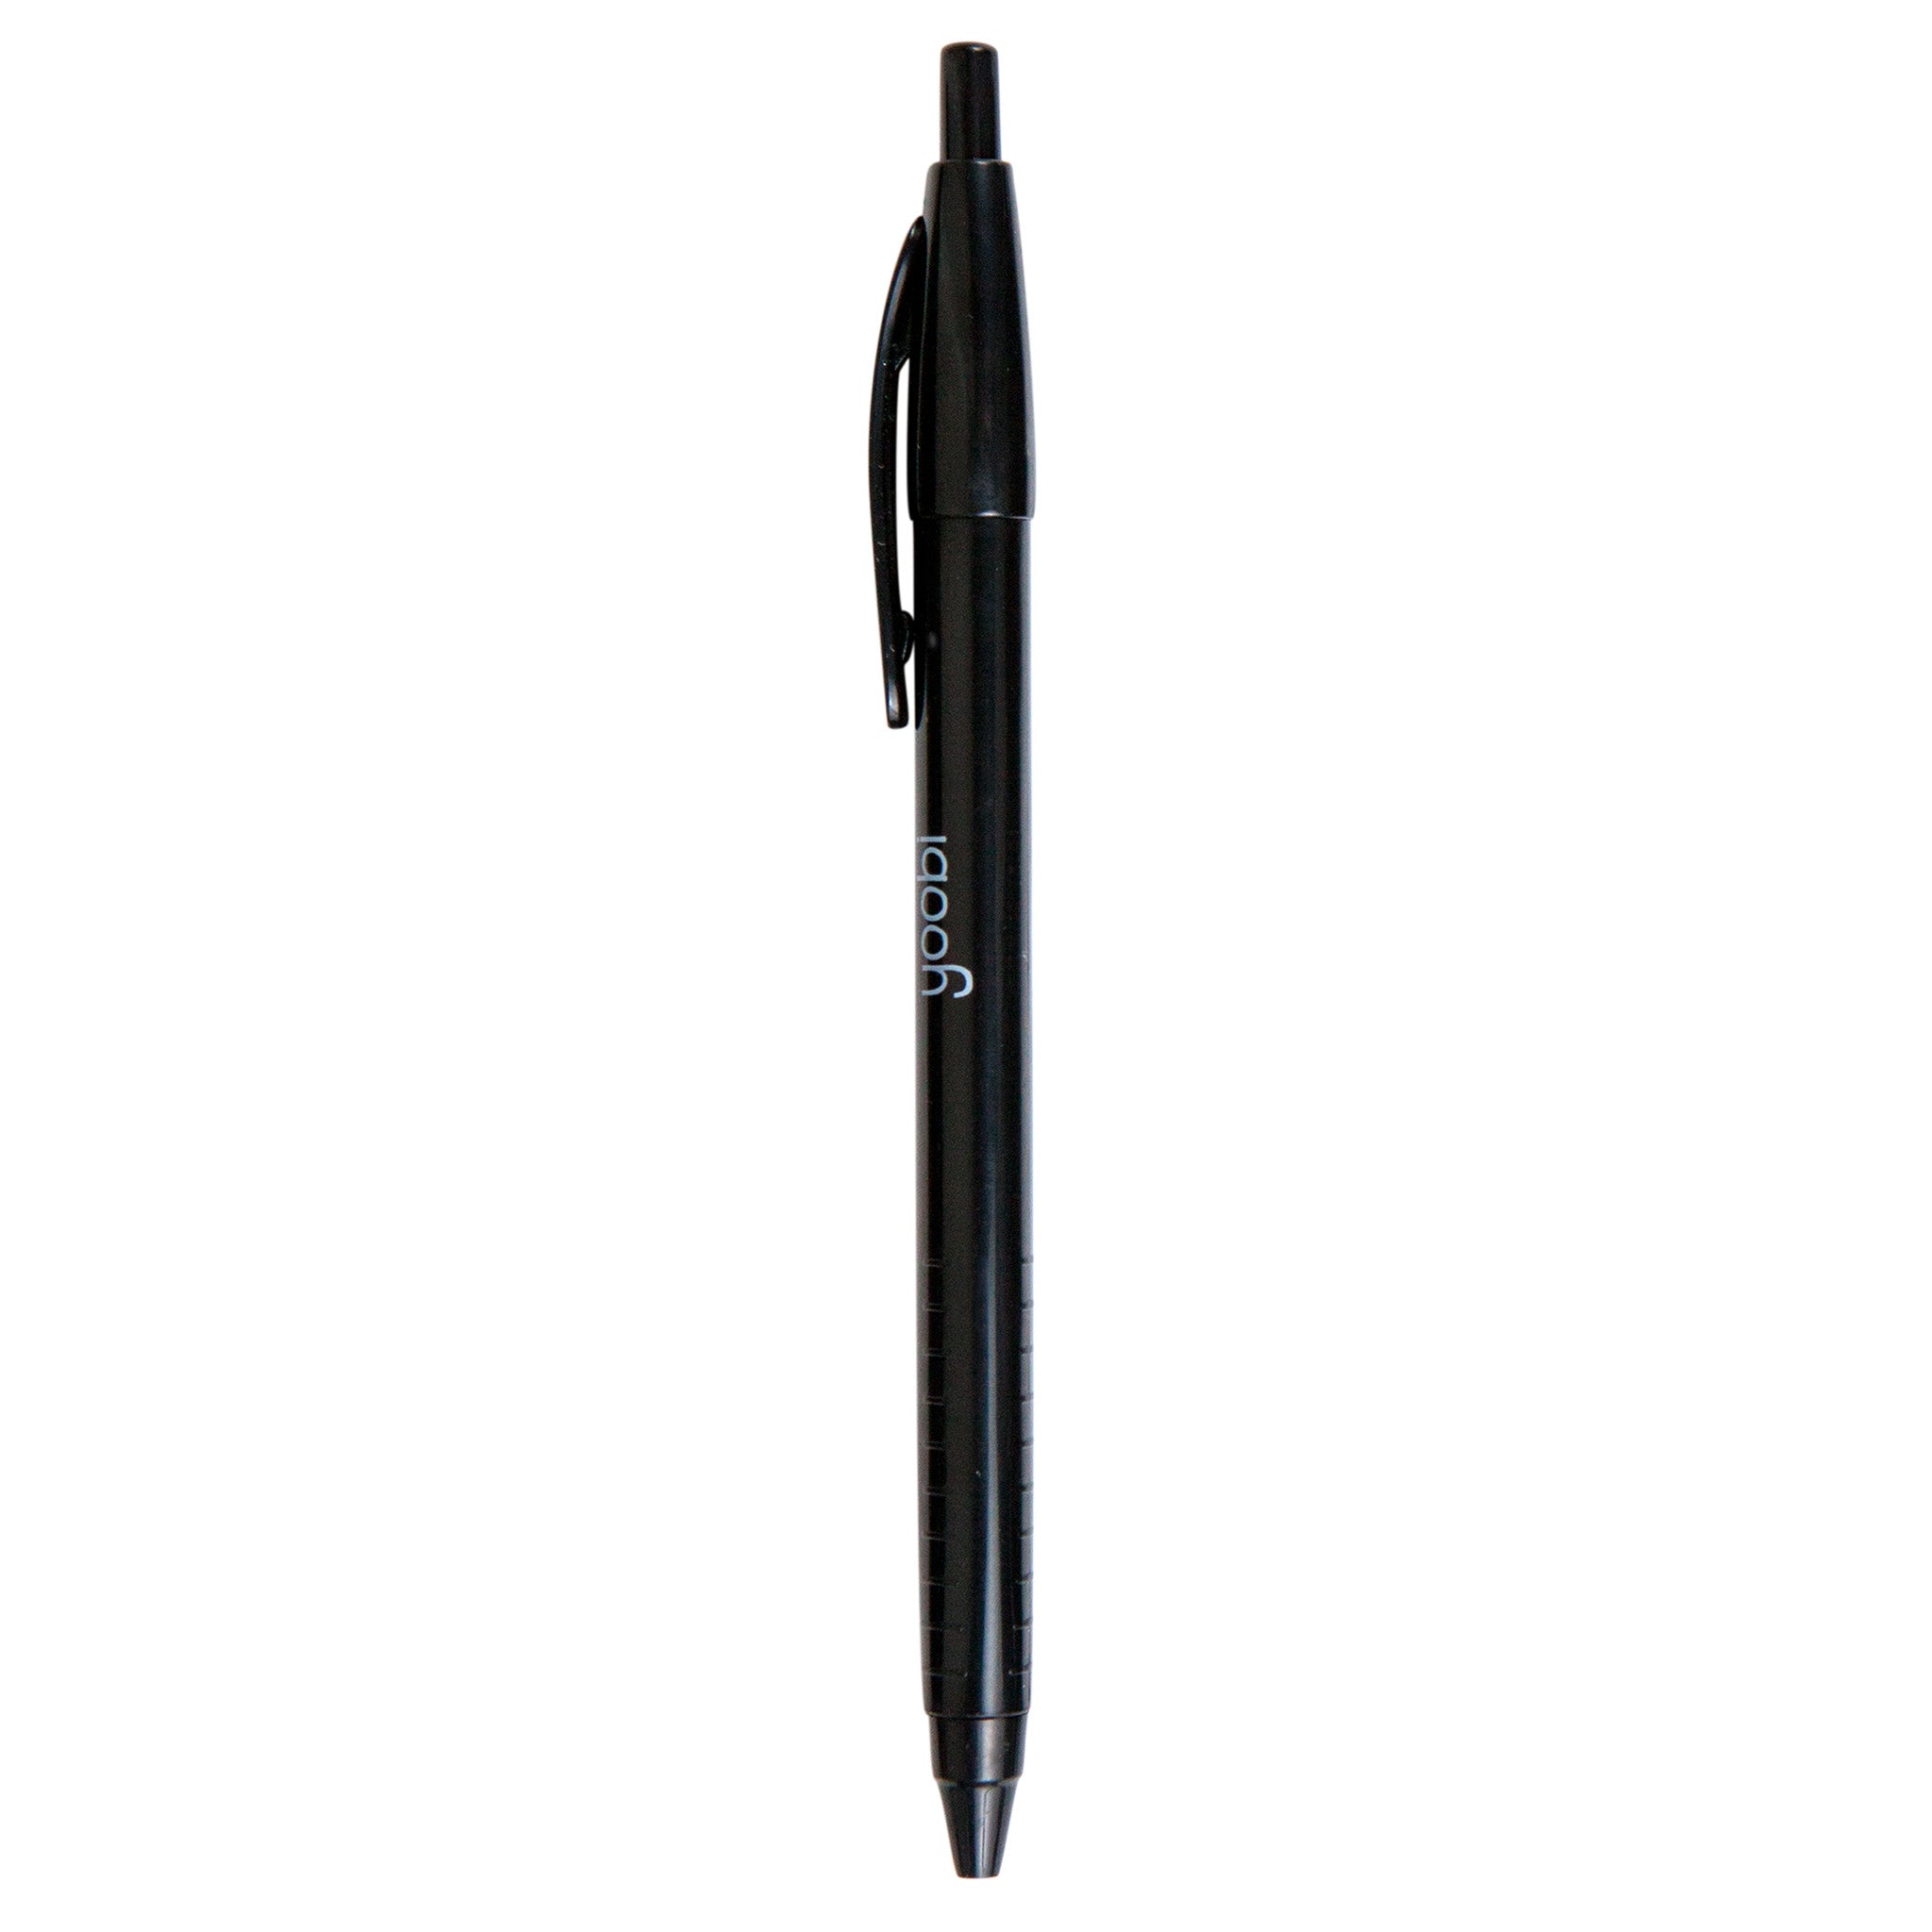 Yoobi Unicorn Ballpoint Pen, Black Ink